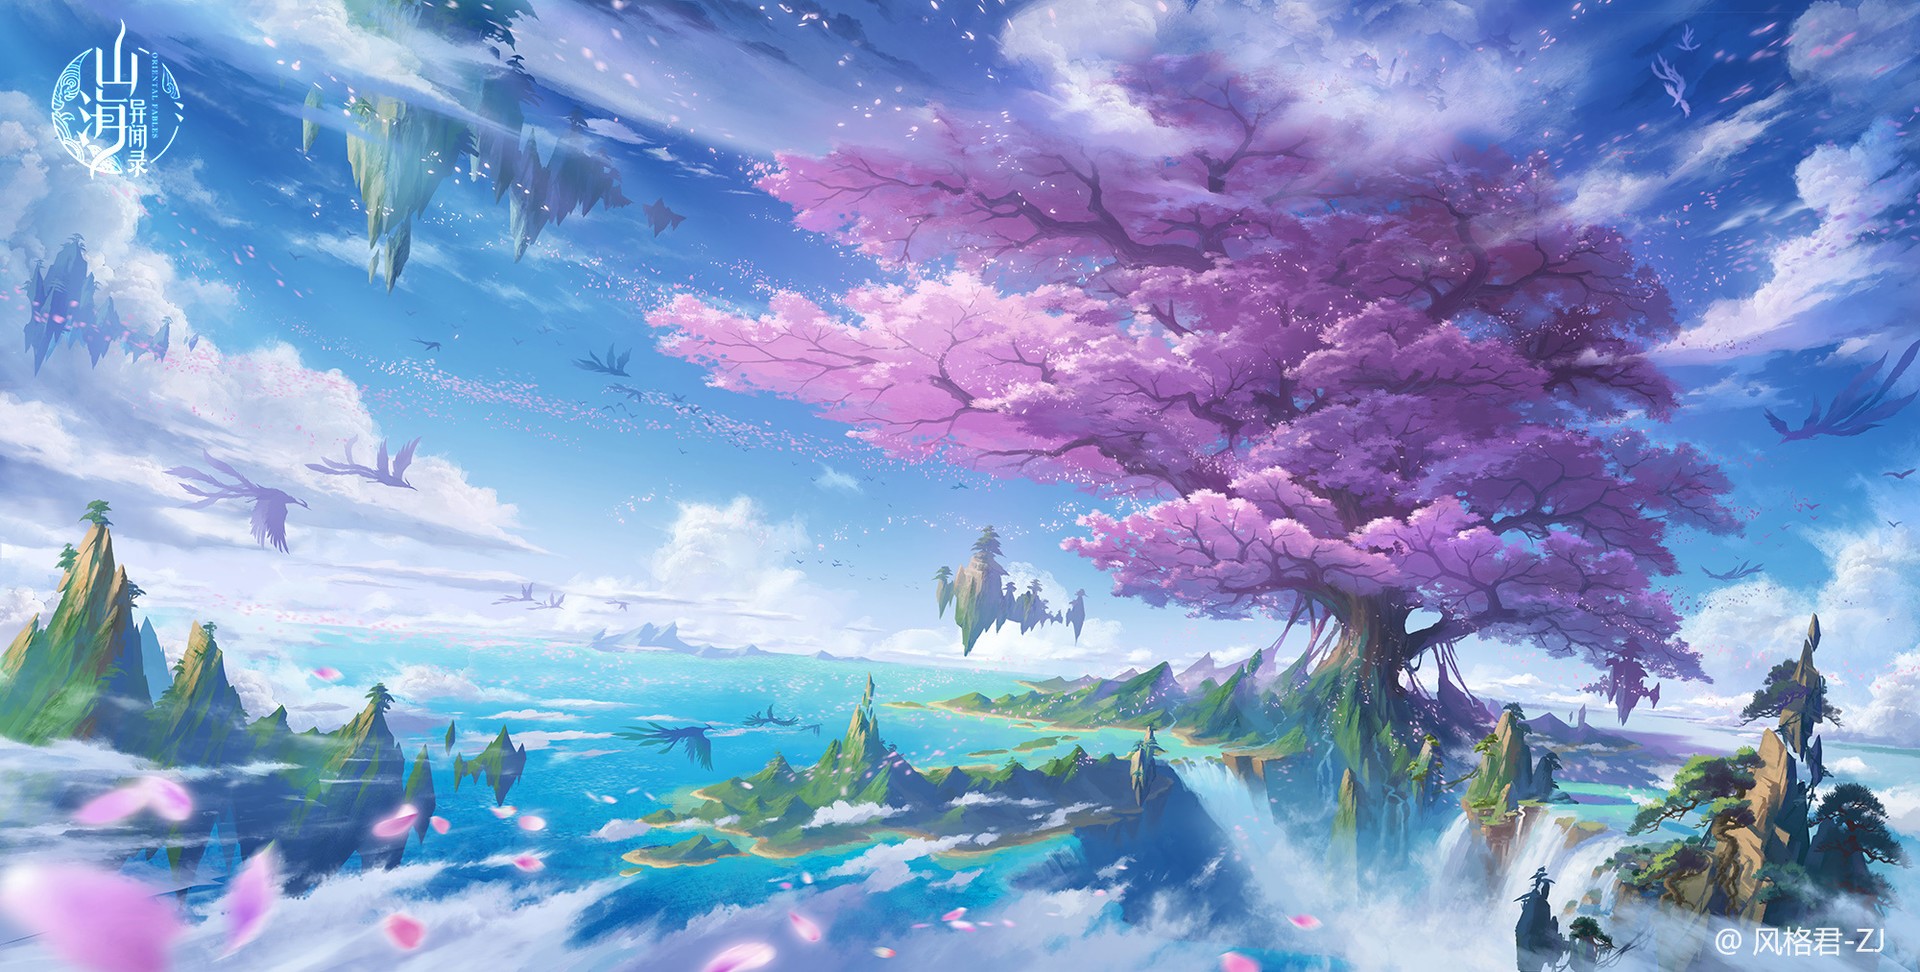 dragon, waterfall, digital art, landscape, Jun Zhang, cherry blossom, fantasy art, clouds Gallery HD Wallpaper